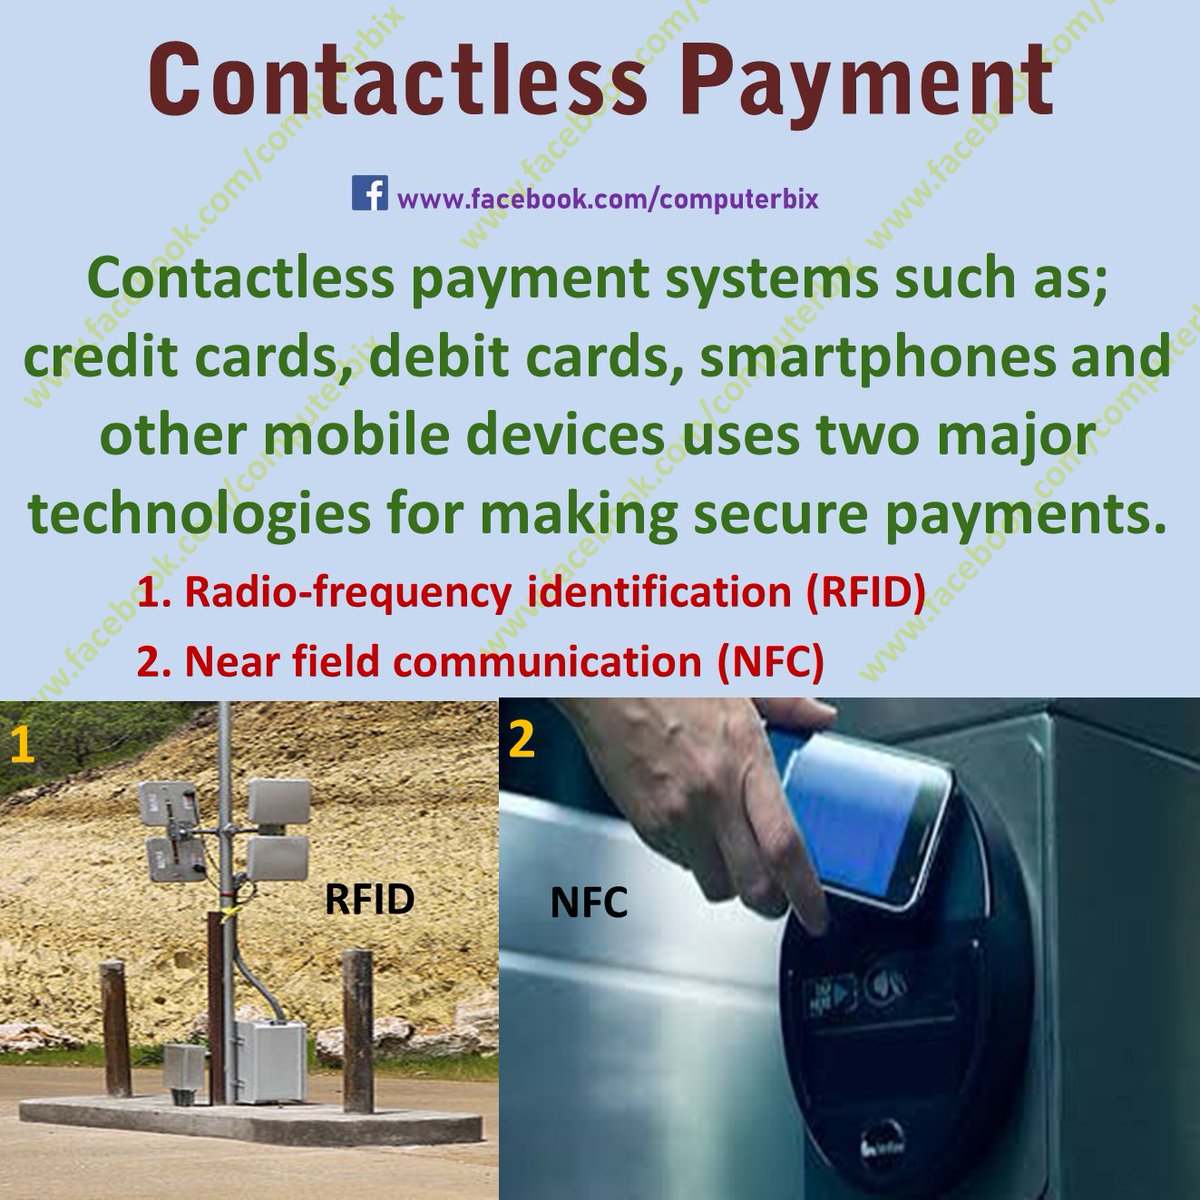 Contactless Payment #technology #contactless #payments #NFC #RFID #mobilepayments #computer_bix